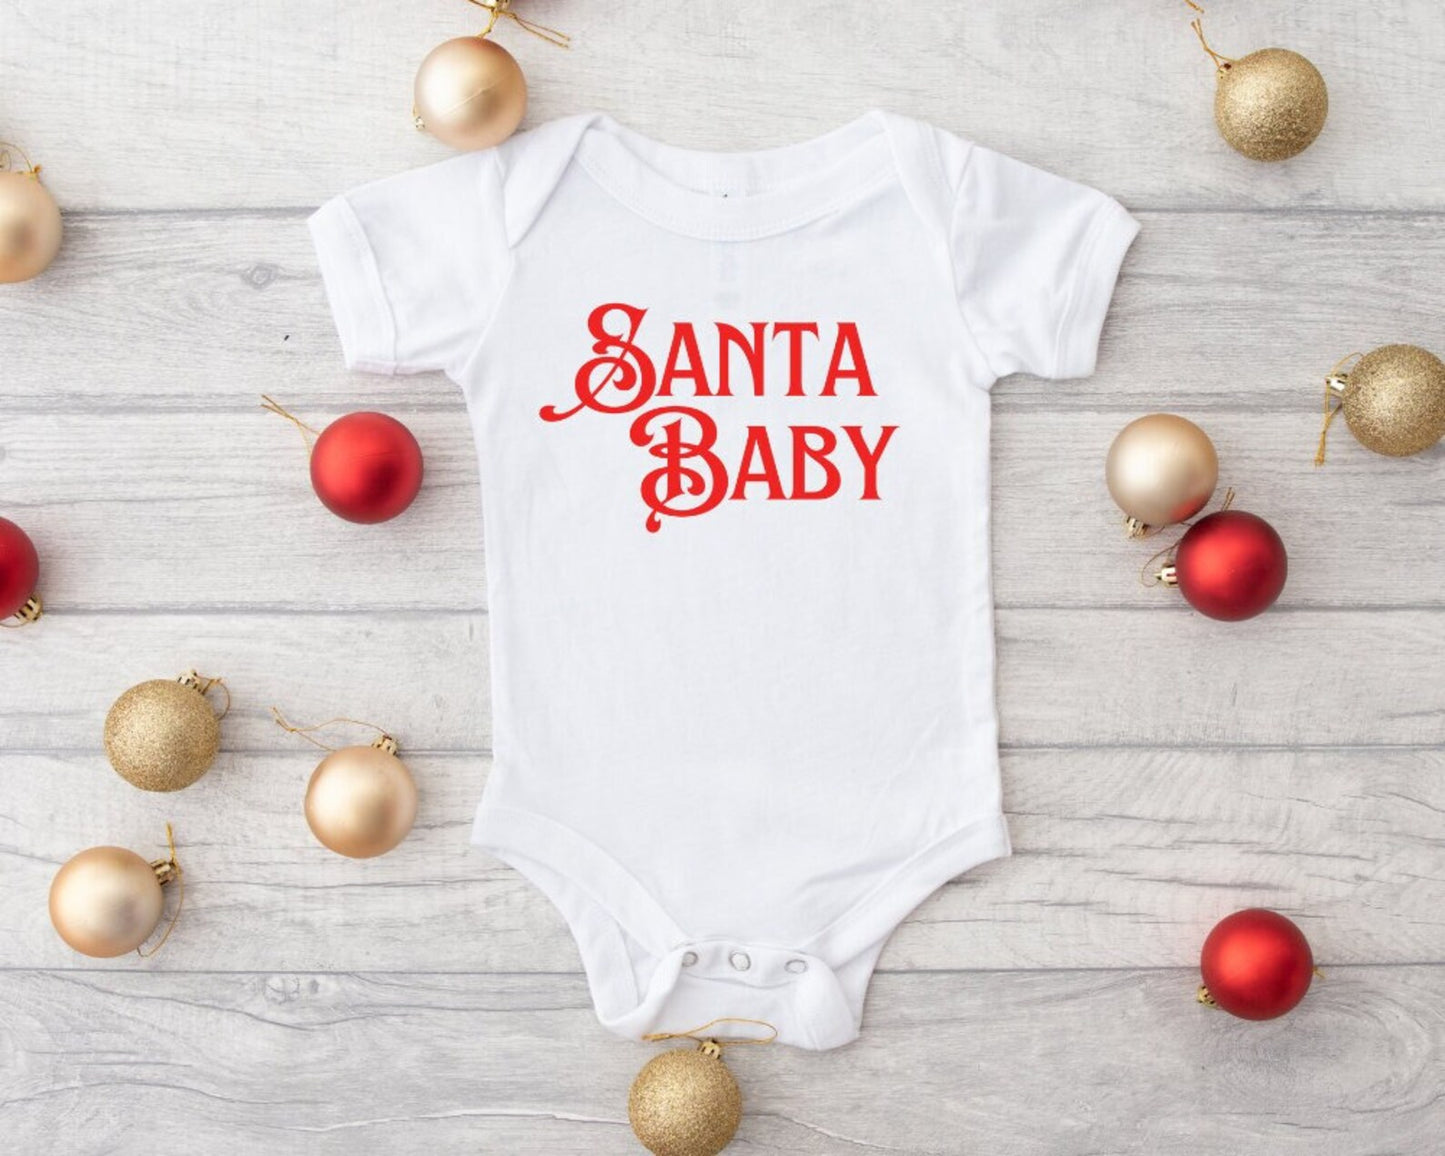 Swig Life® on Instagram: Santa Baby, just slip a new Swig under